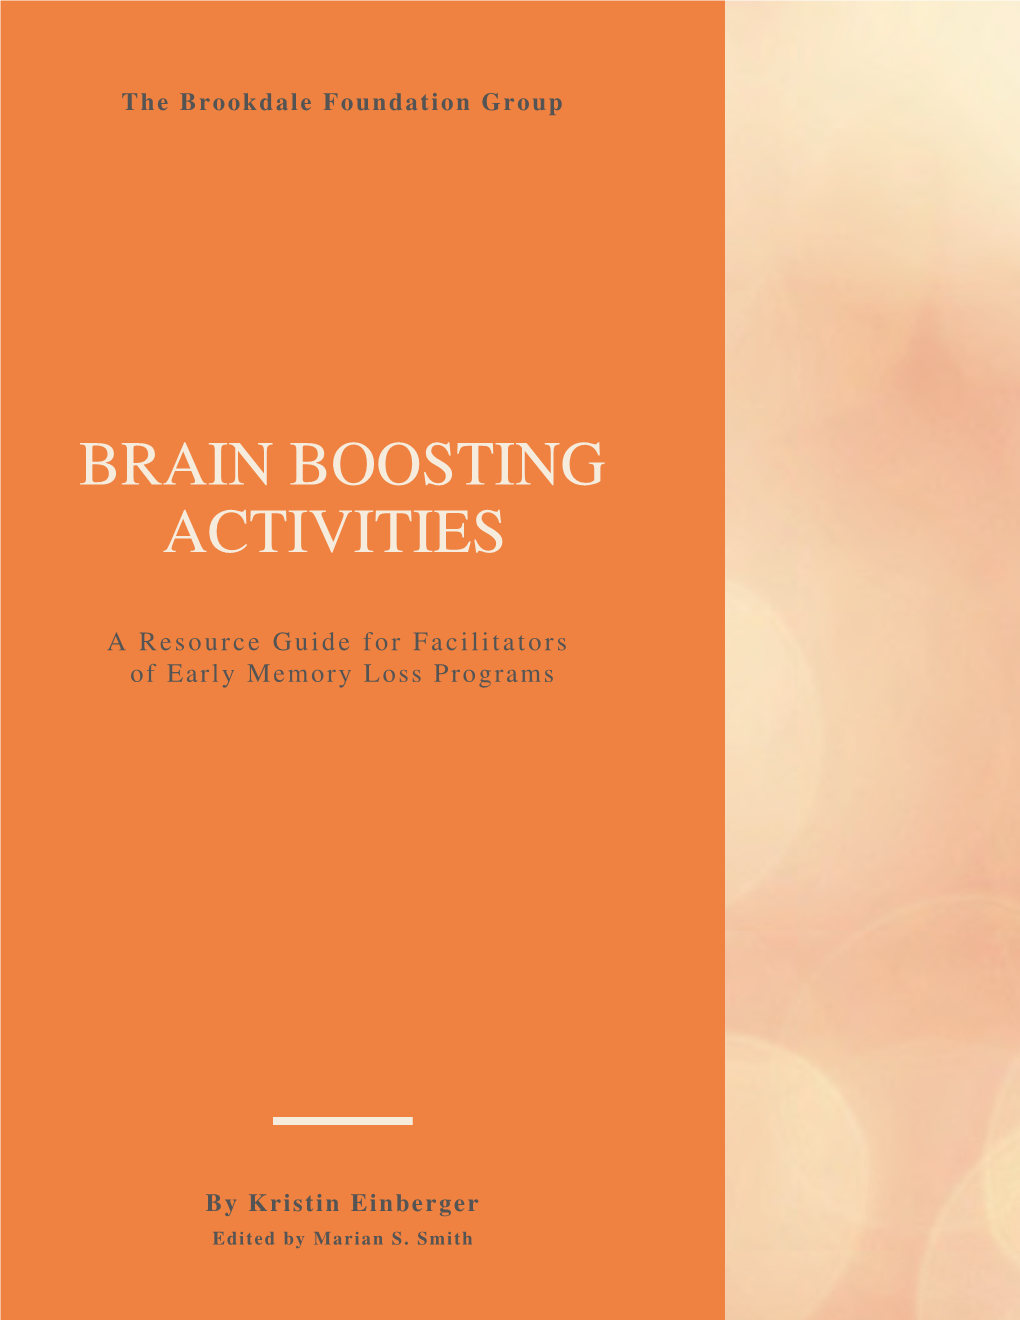 Brain Boosting Activities